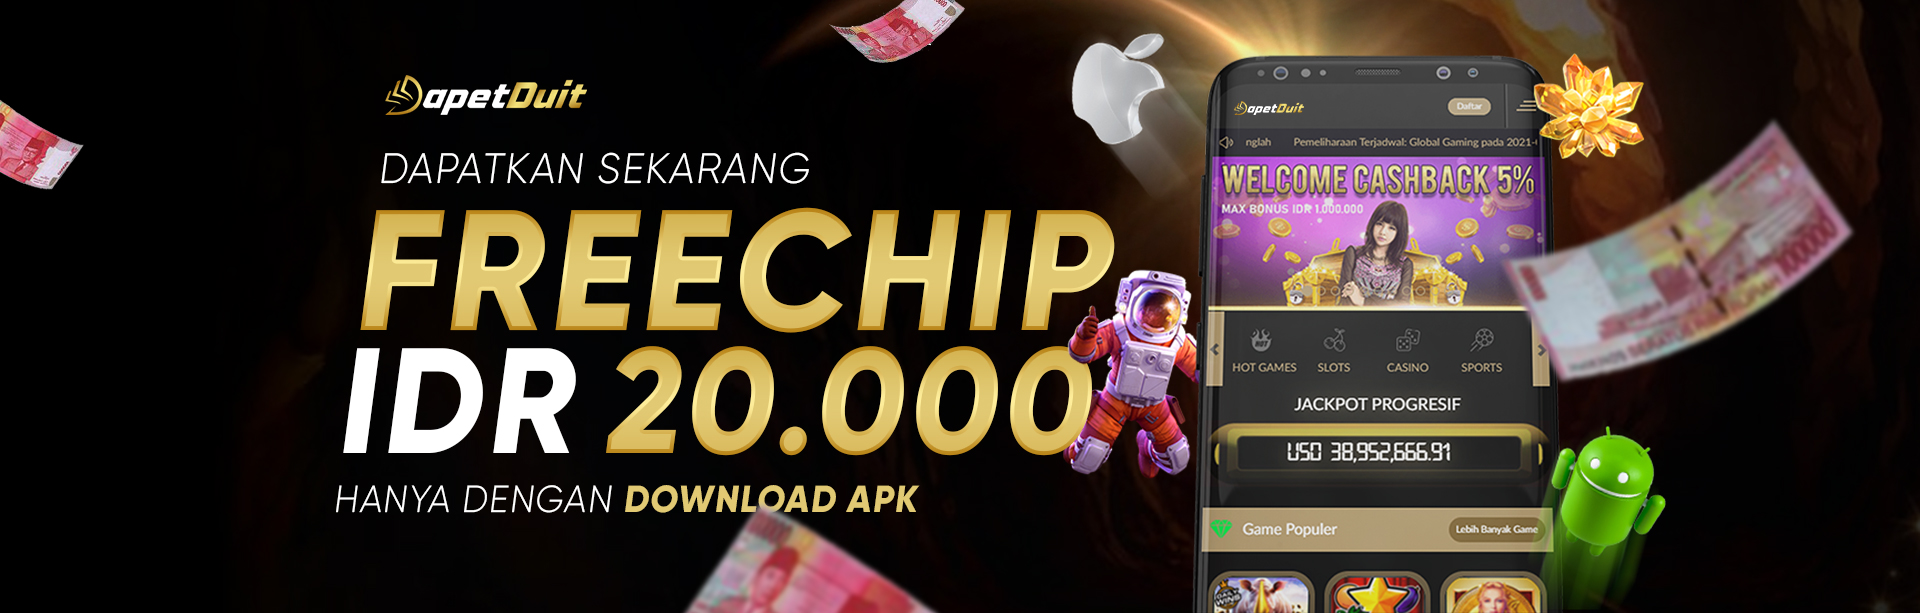 Freechip 20 rb Download APK